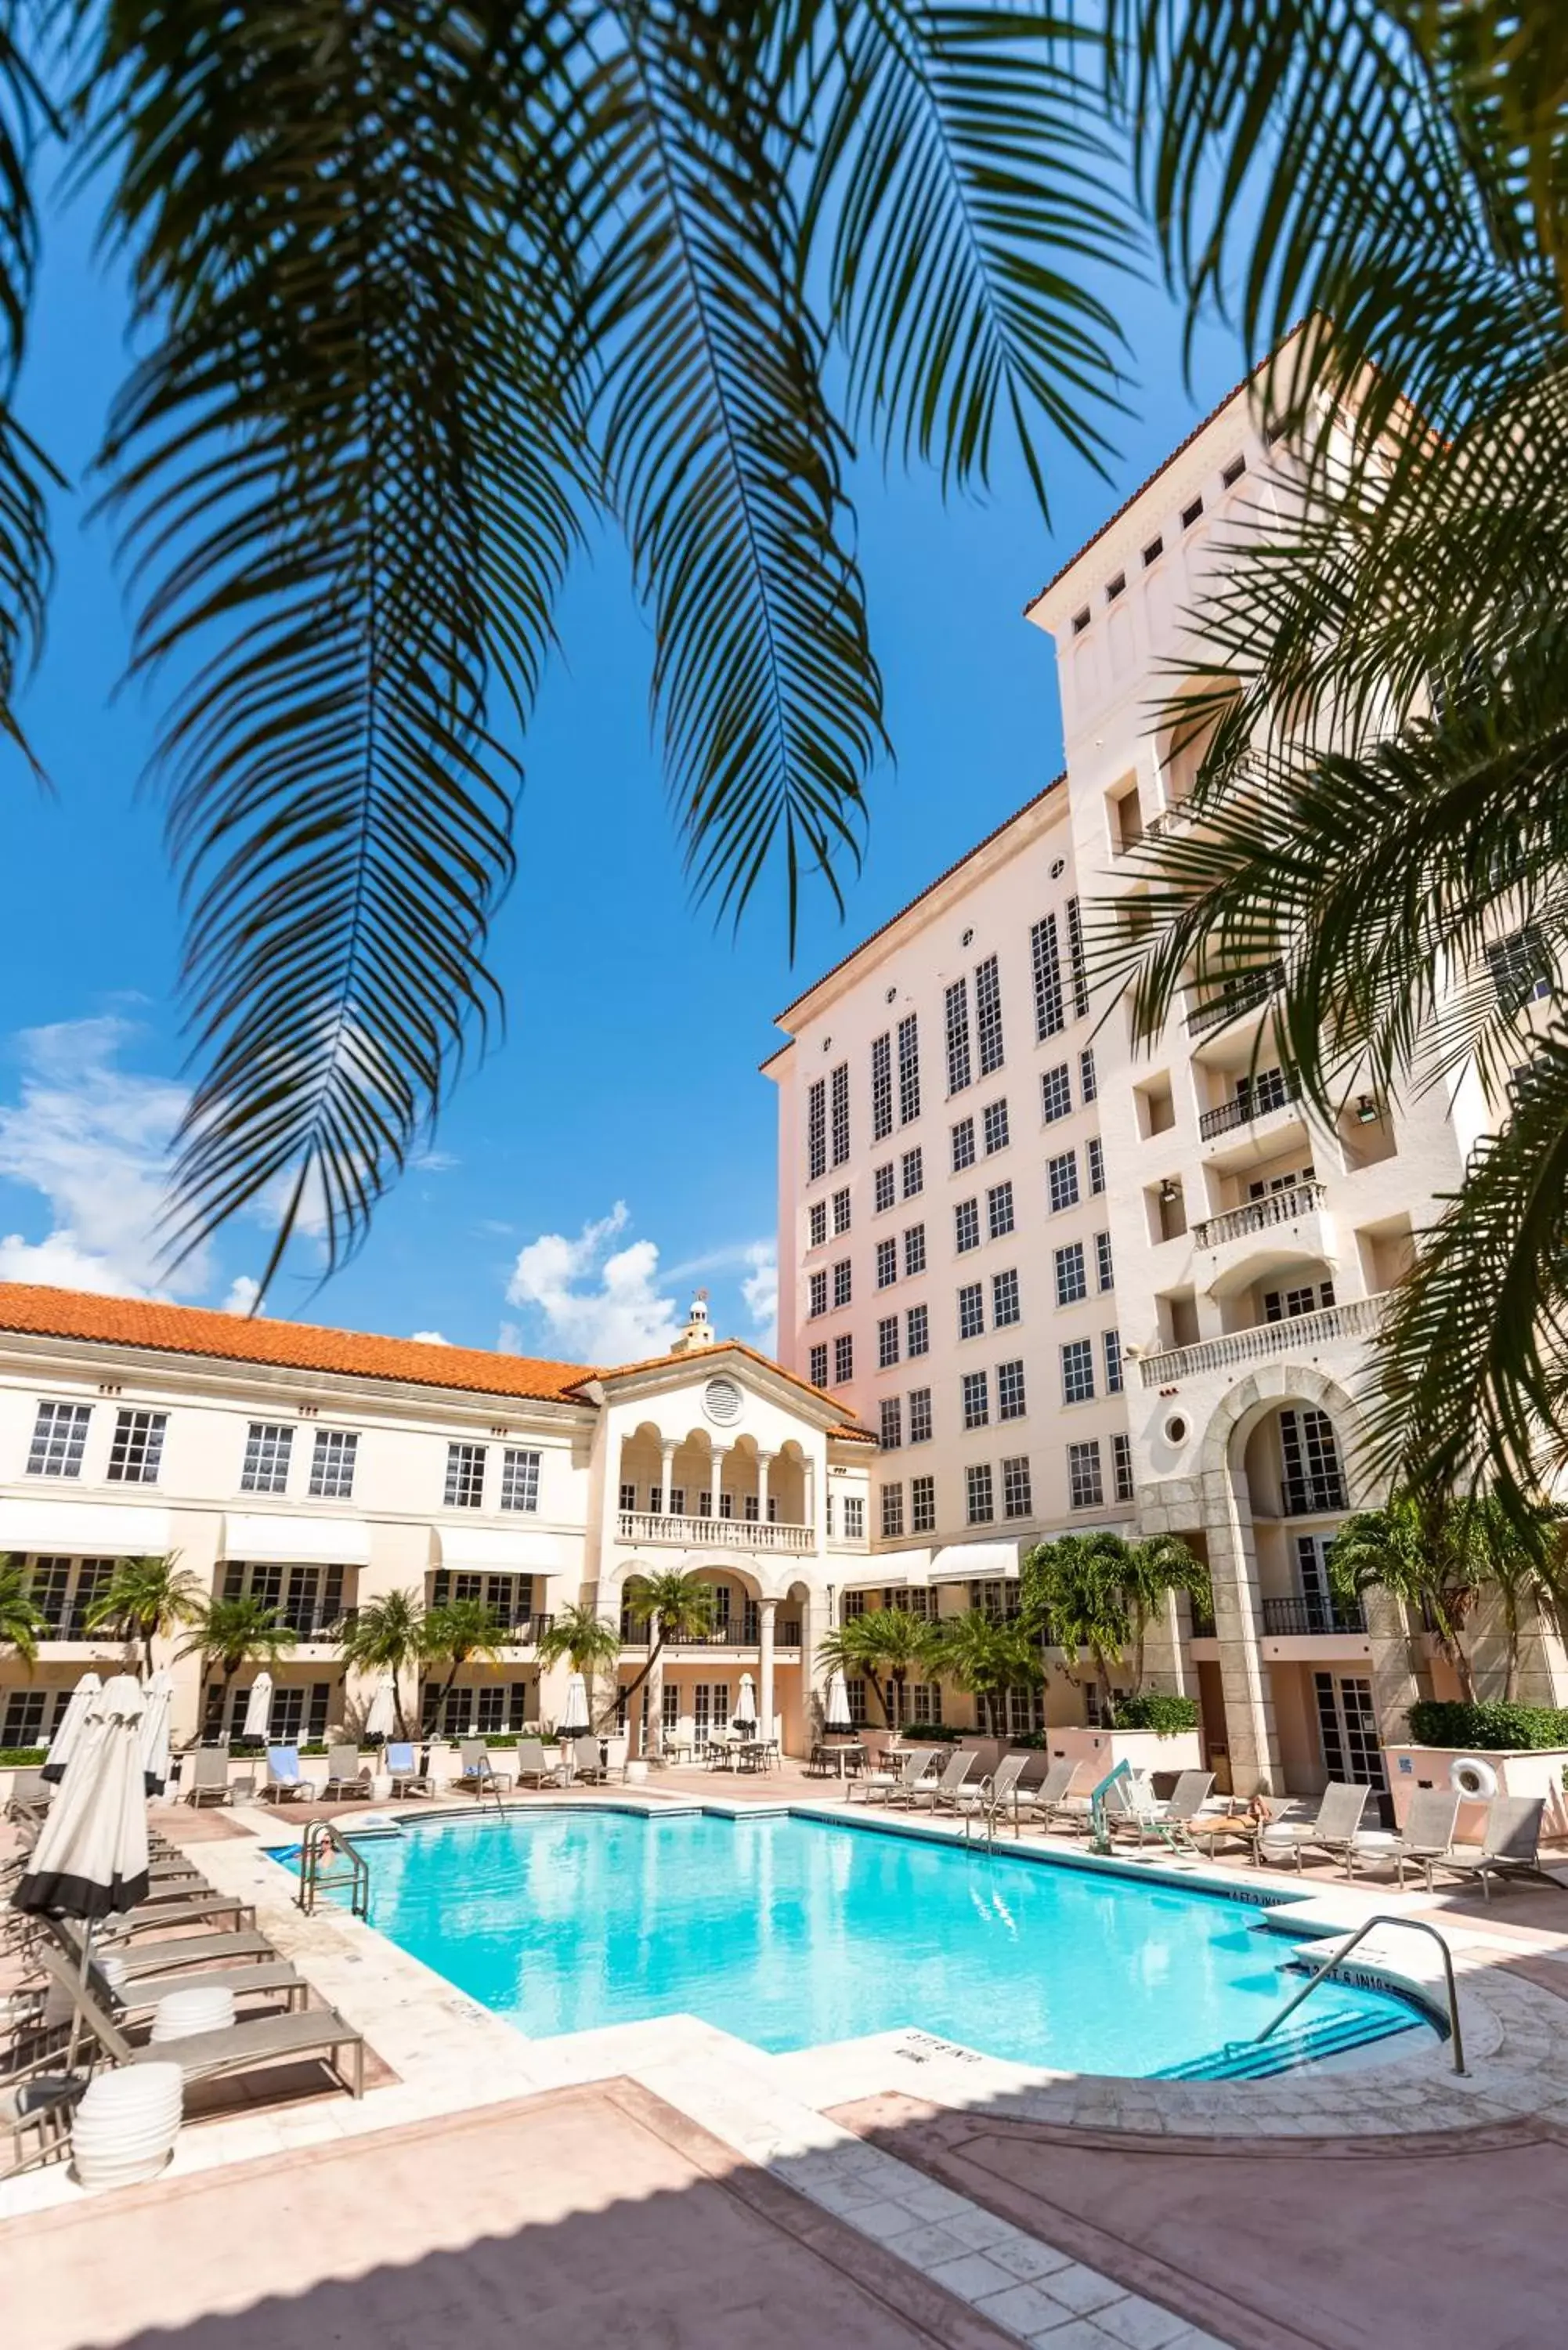 Property building, Swimming Pool in Hyatt Regency Coral Gables in Miami